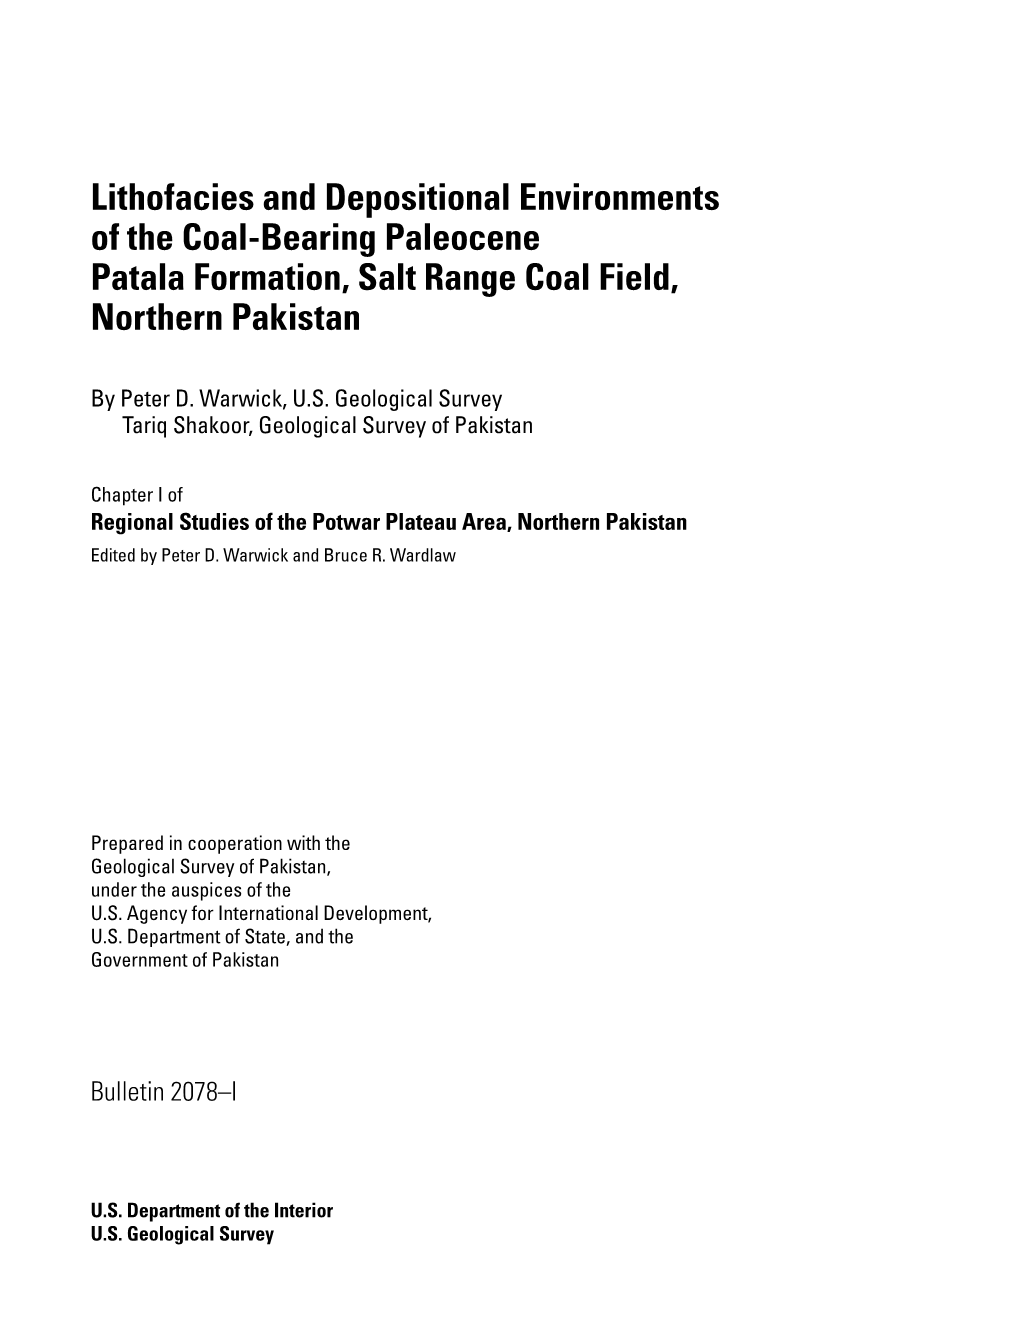 Lithofacies and Depositional Environments of the Coal-Bearing Paleocene Patala Formation, Salt Range Coal Field, Northern Pakistan